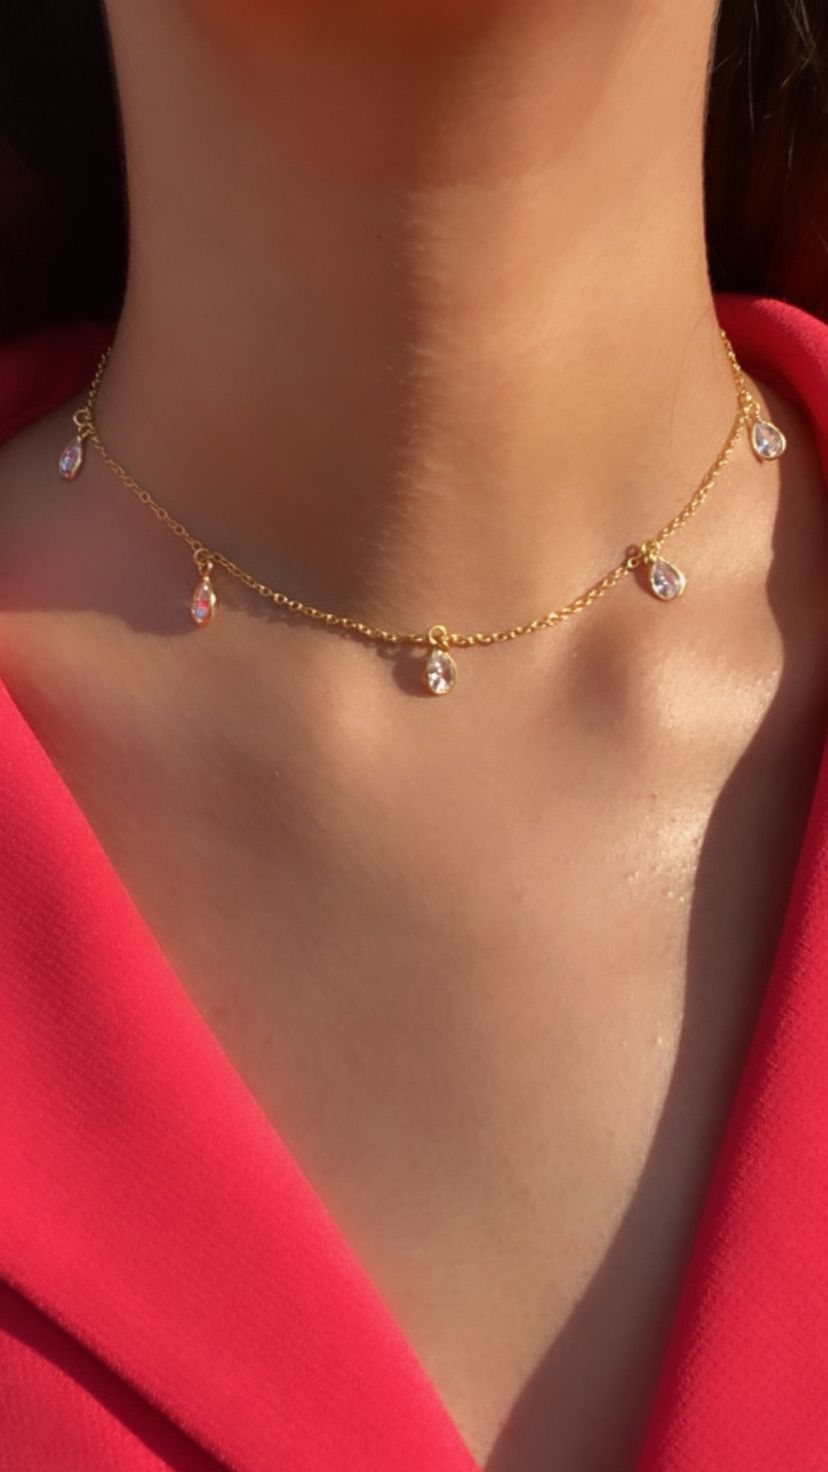 Pear drop necklace